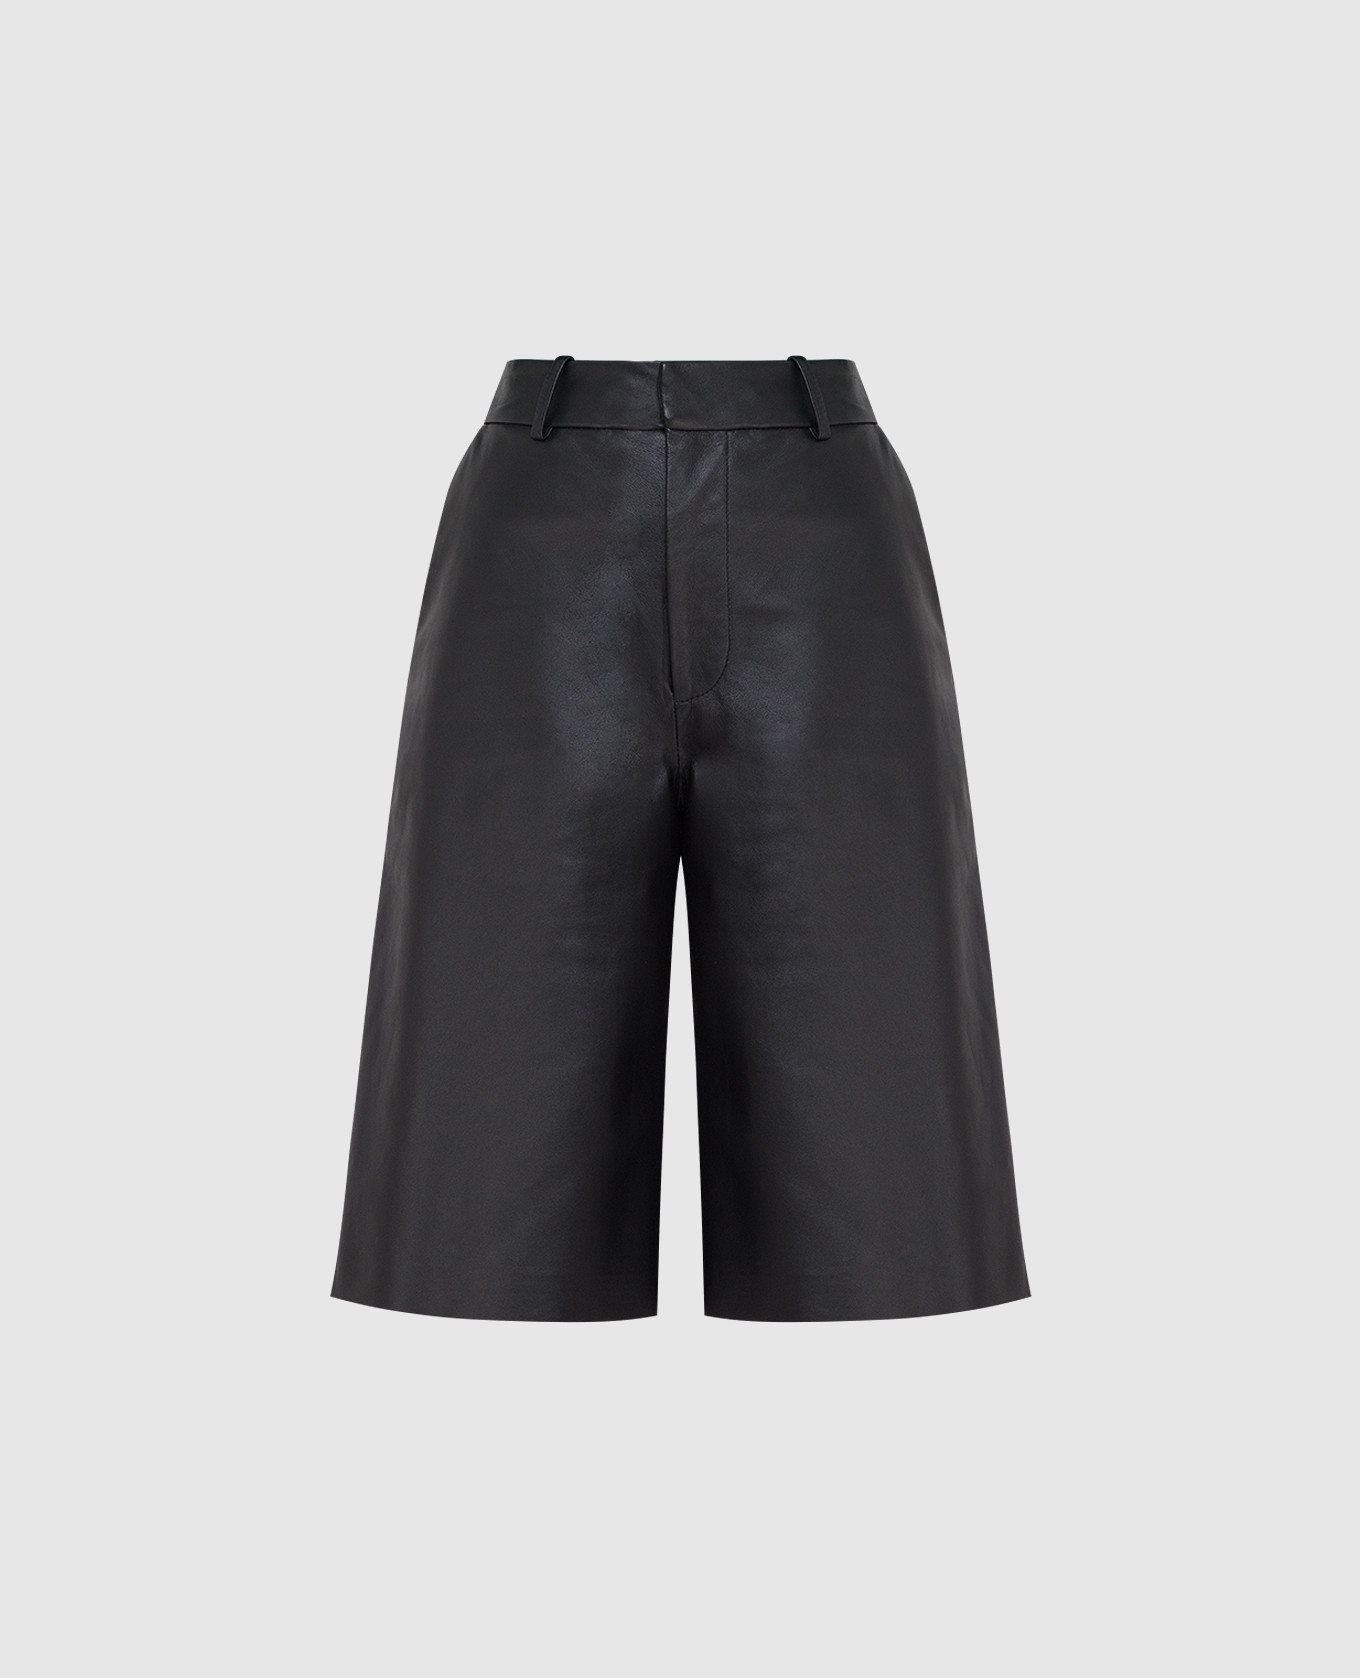 Black Leather Bermuda Shorts